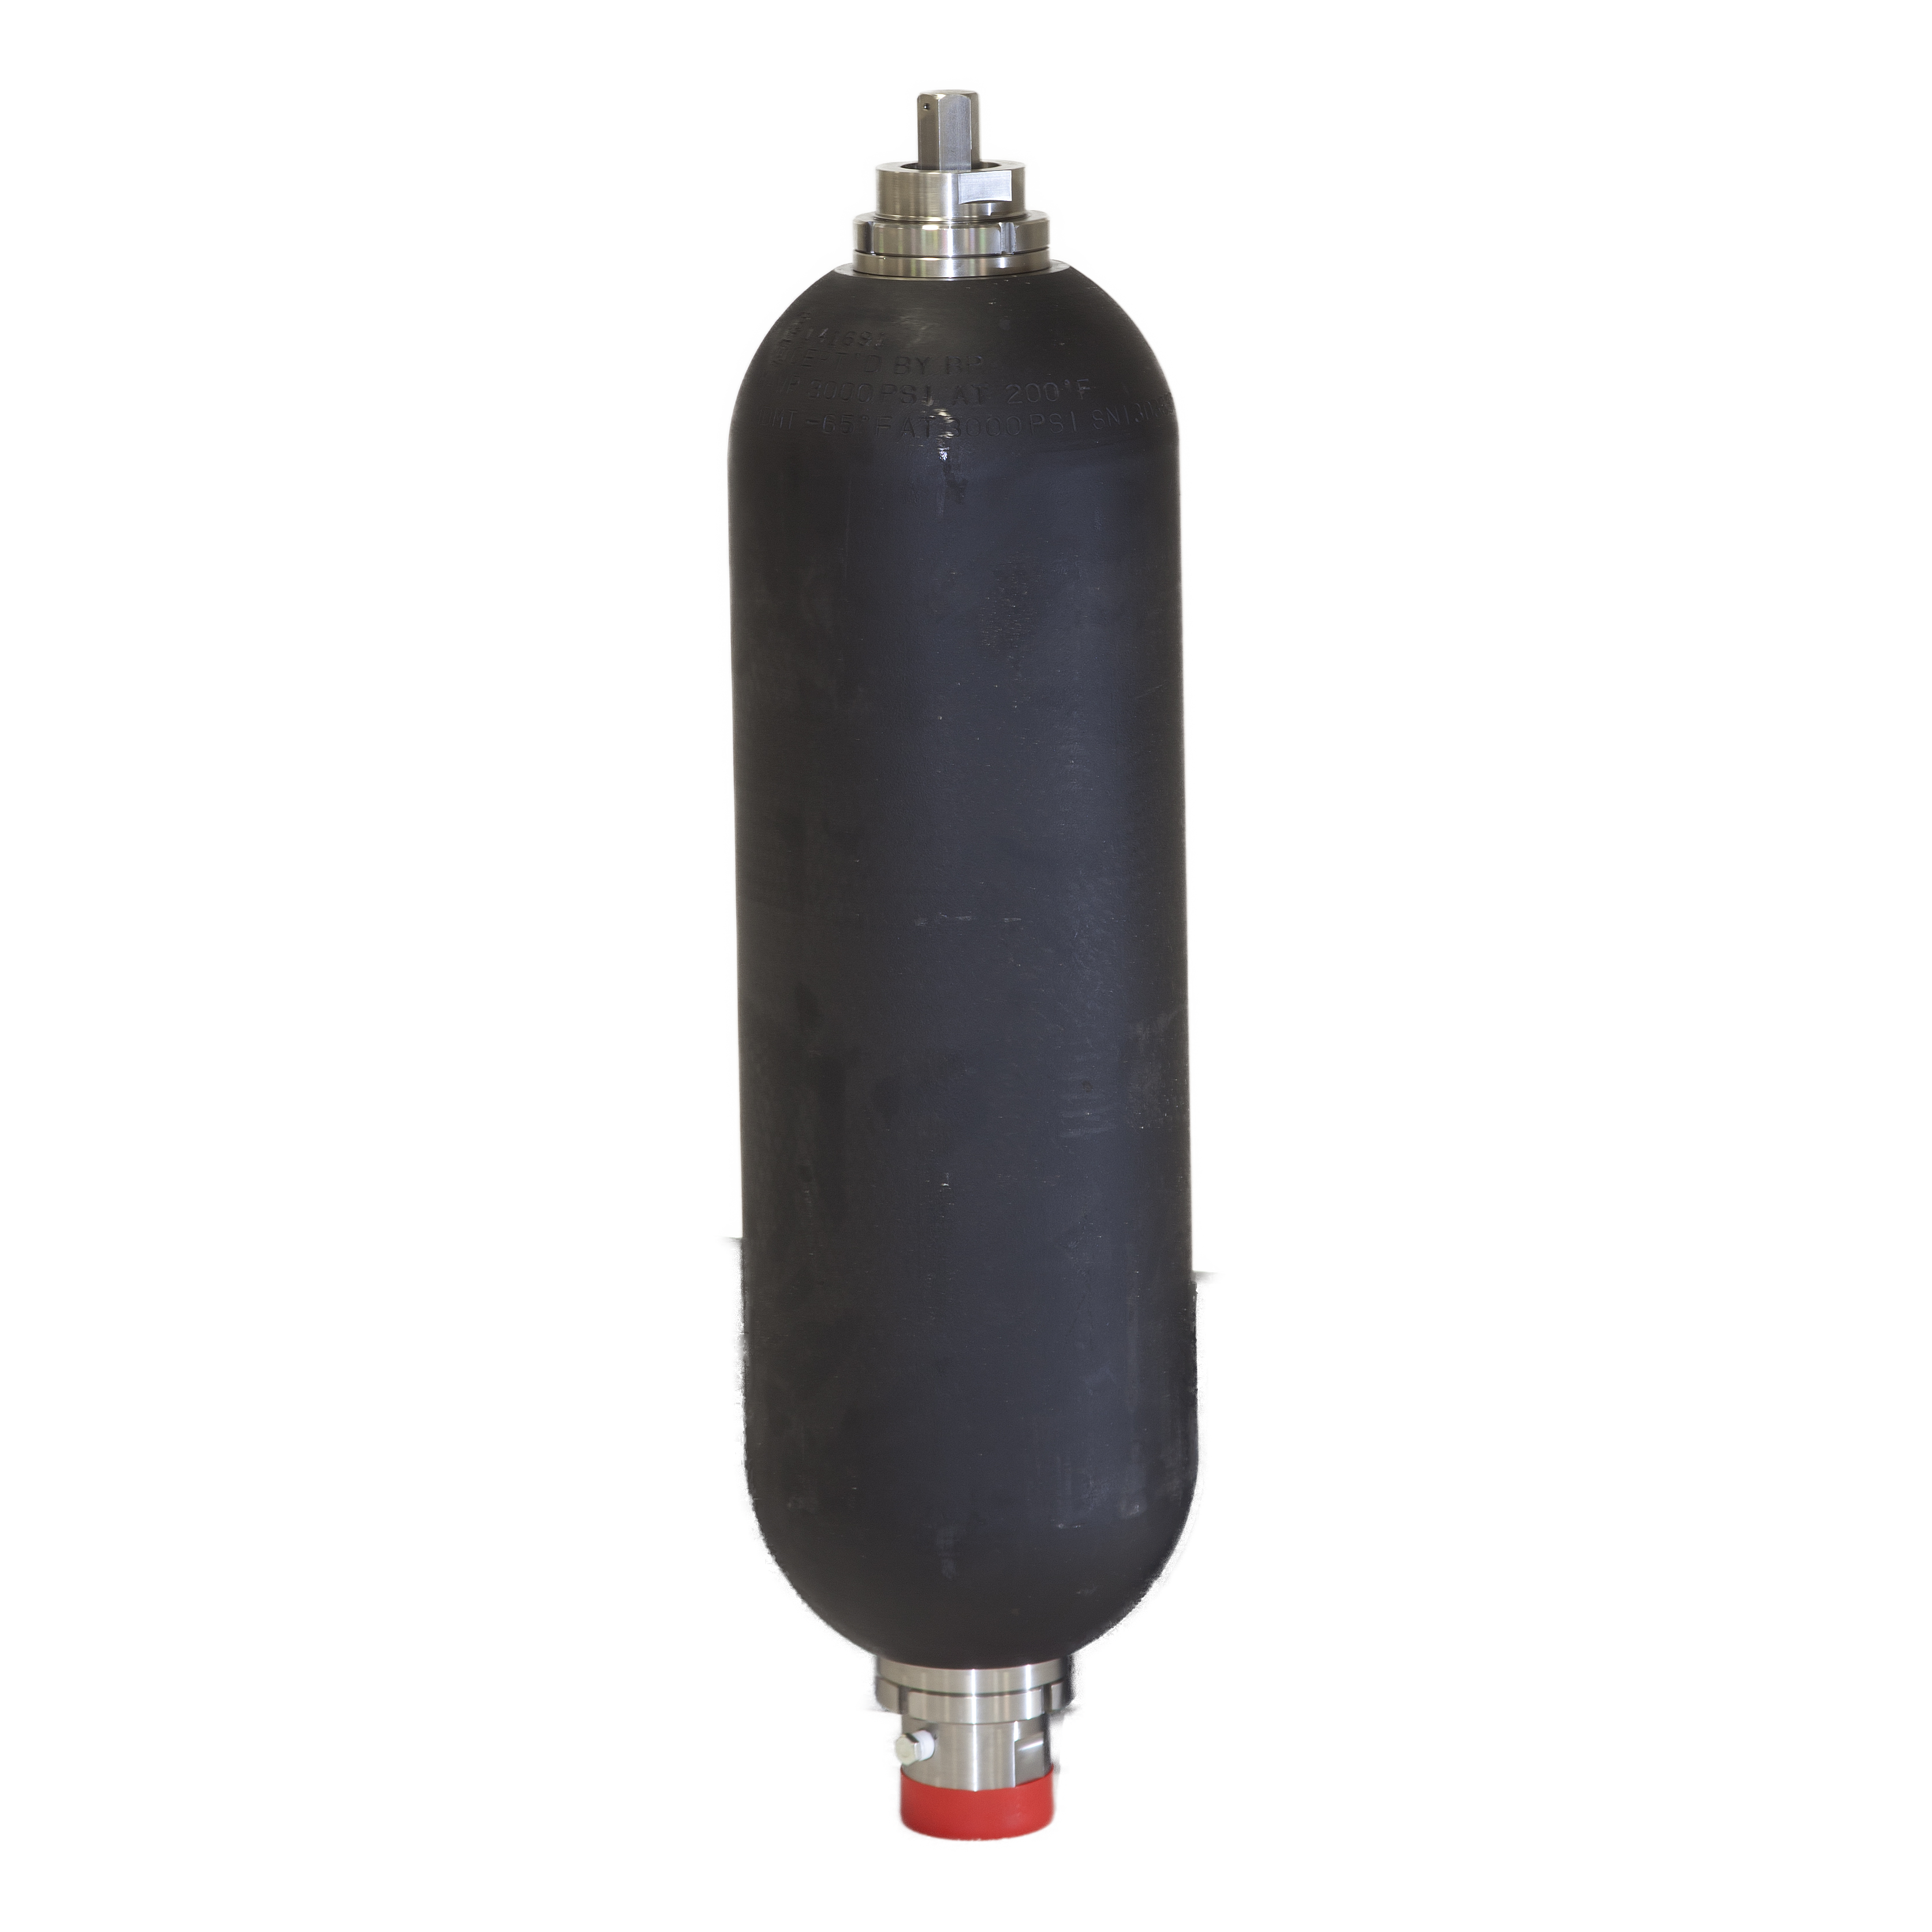 GB10-05-NE-N-O-1-A : SFP Gas Bottles 5000psi, 5000psi, 2.5 Gallon (10 Liter), 1.25" NPT